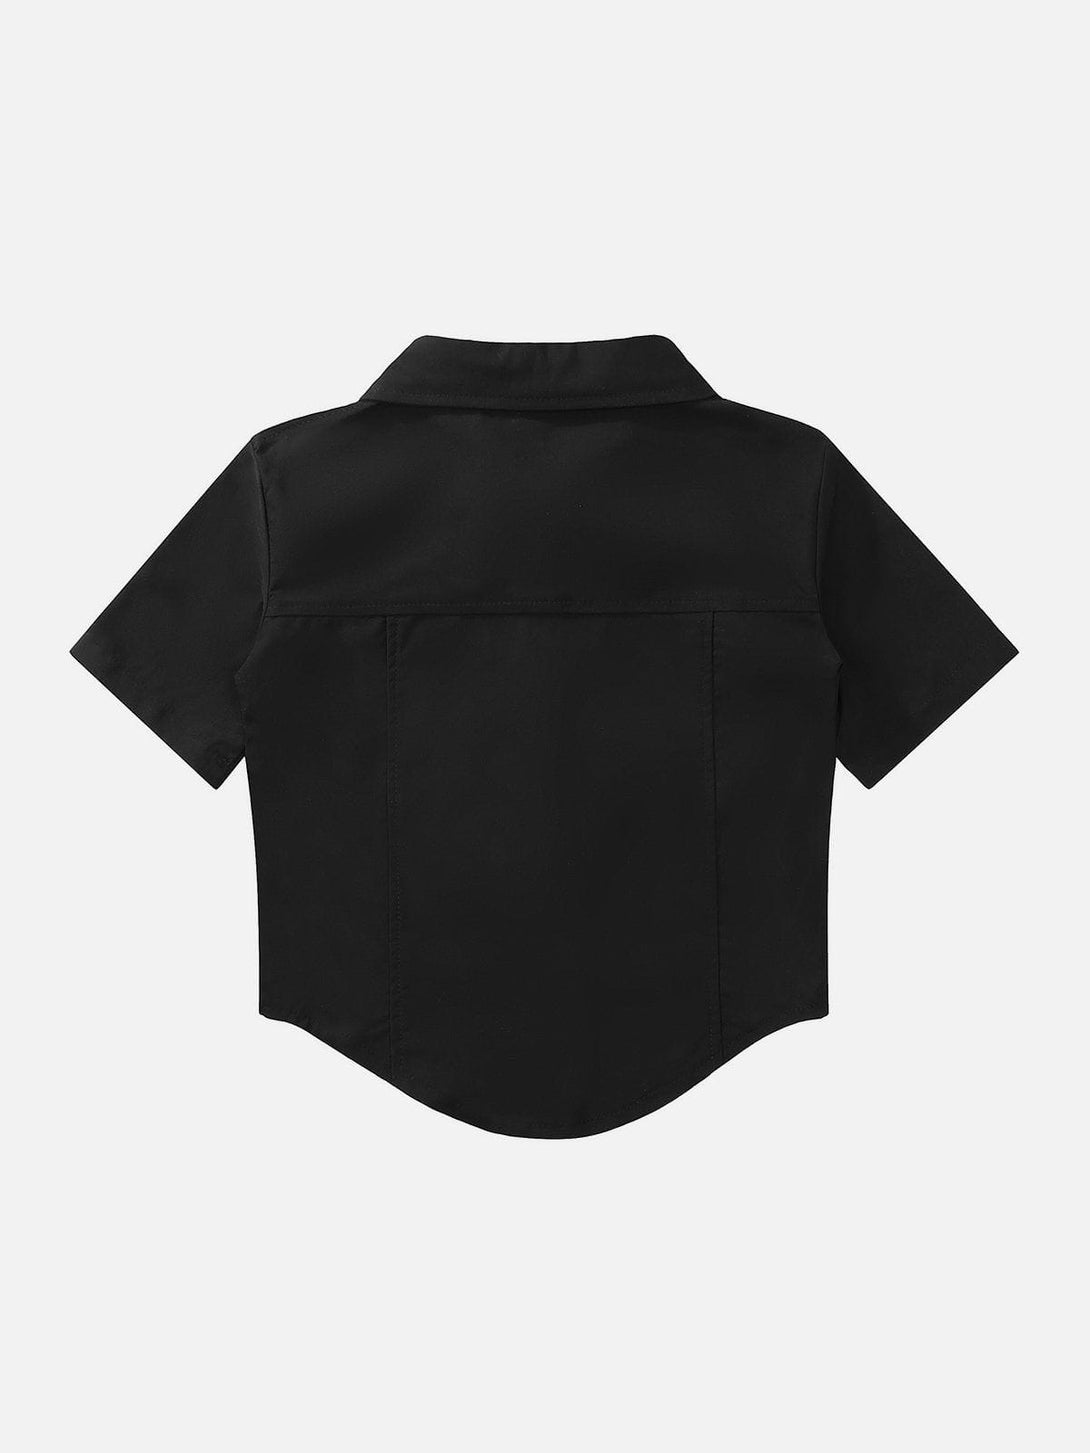 Evapacs - Simple Short Short Sleeve Shirt- Streetwear Fashion - evapacs.com